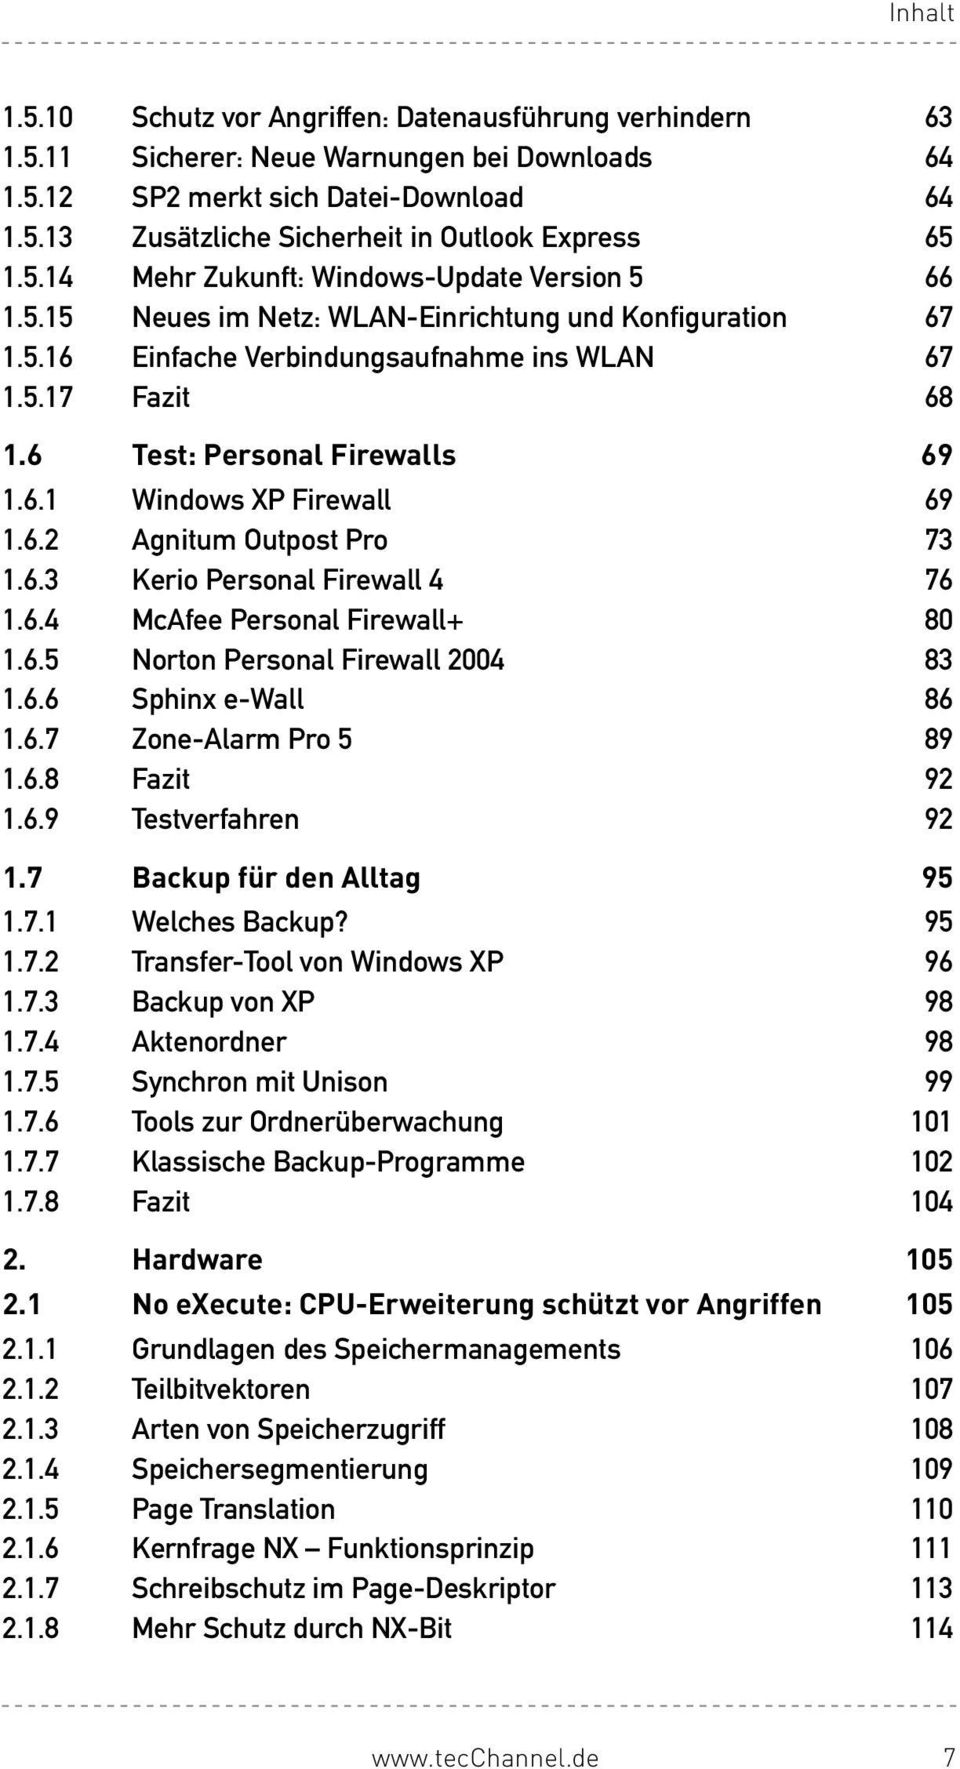 6 Test: Personal Firewalls 69 1.6.1 Windows XP Firewall 69 1.6.2 Agnitum Outpost Pro 73 1.6.3 Kerio Personal Firewall 4 76 1.6.4 McAfee Personal Firewall+ 80 1.6.5 Norton Personal Firewall 2004 83 1.